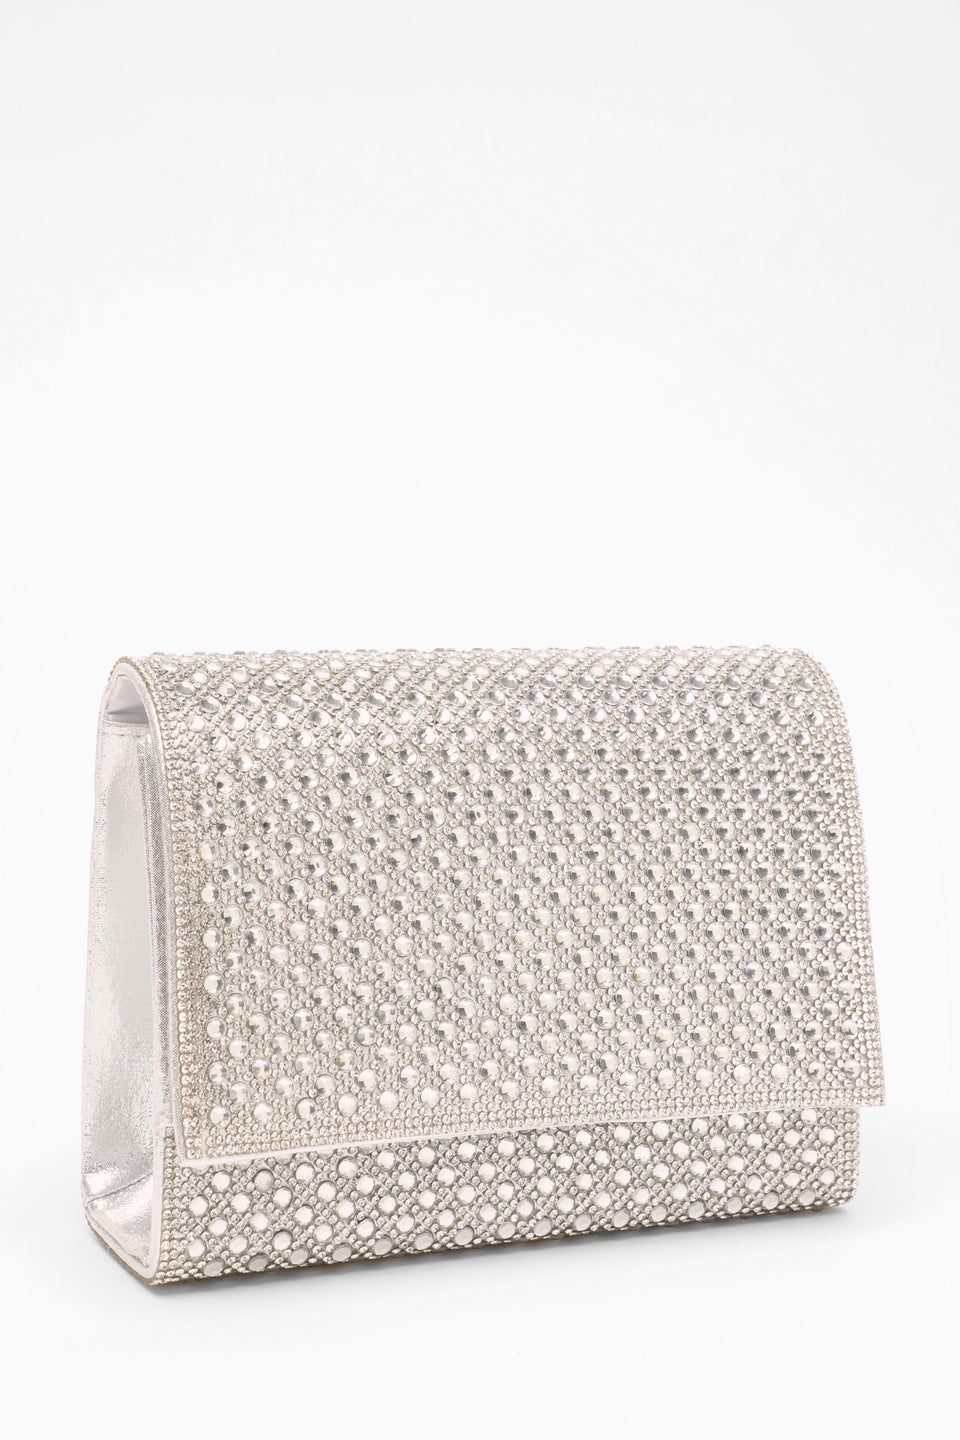 Quiz Silver Diamante Embellished Clutch Bag